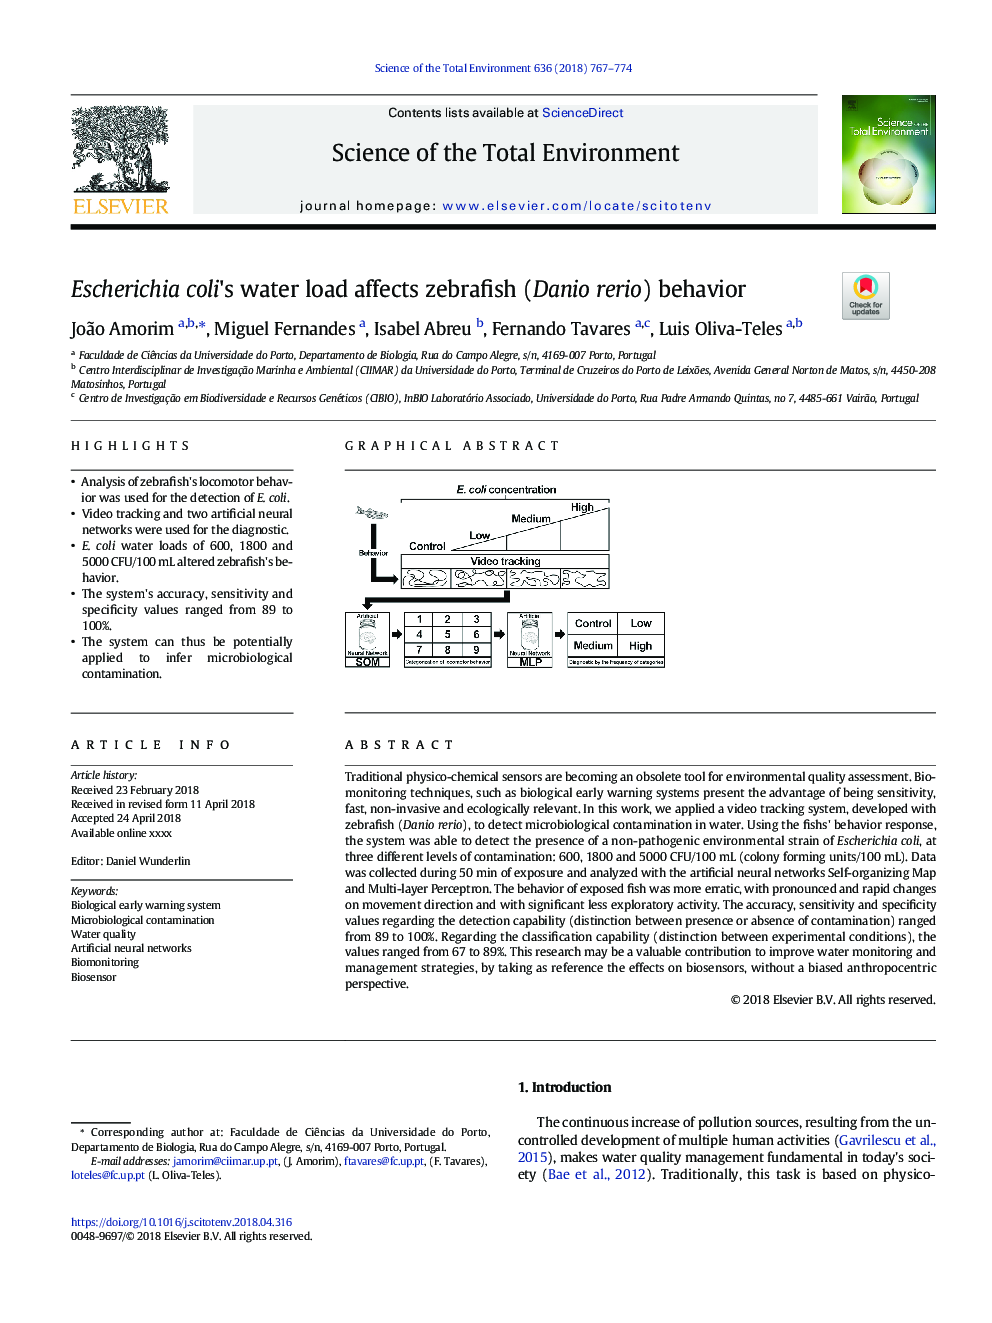 Escherichia coli's water load affects zebrafish (Danio rerio) behavior